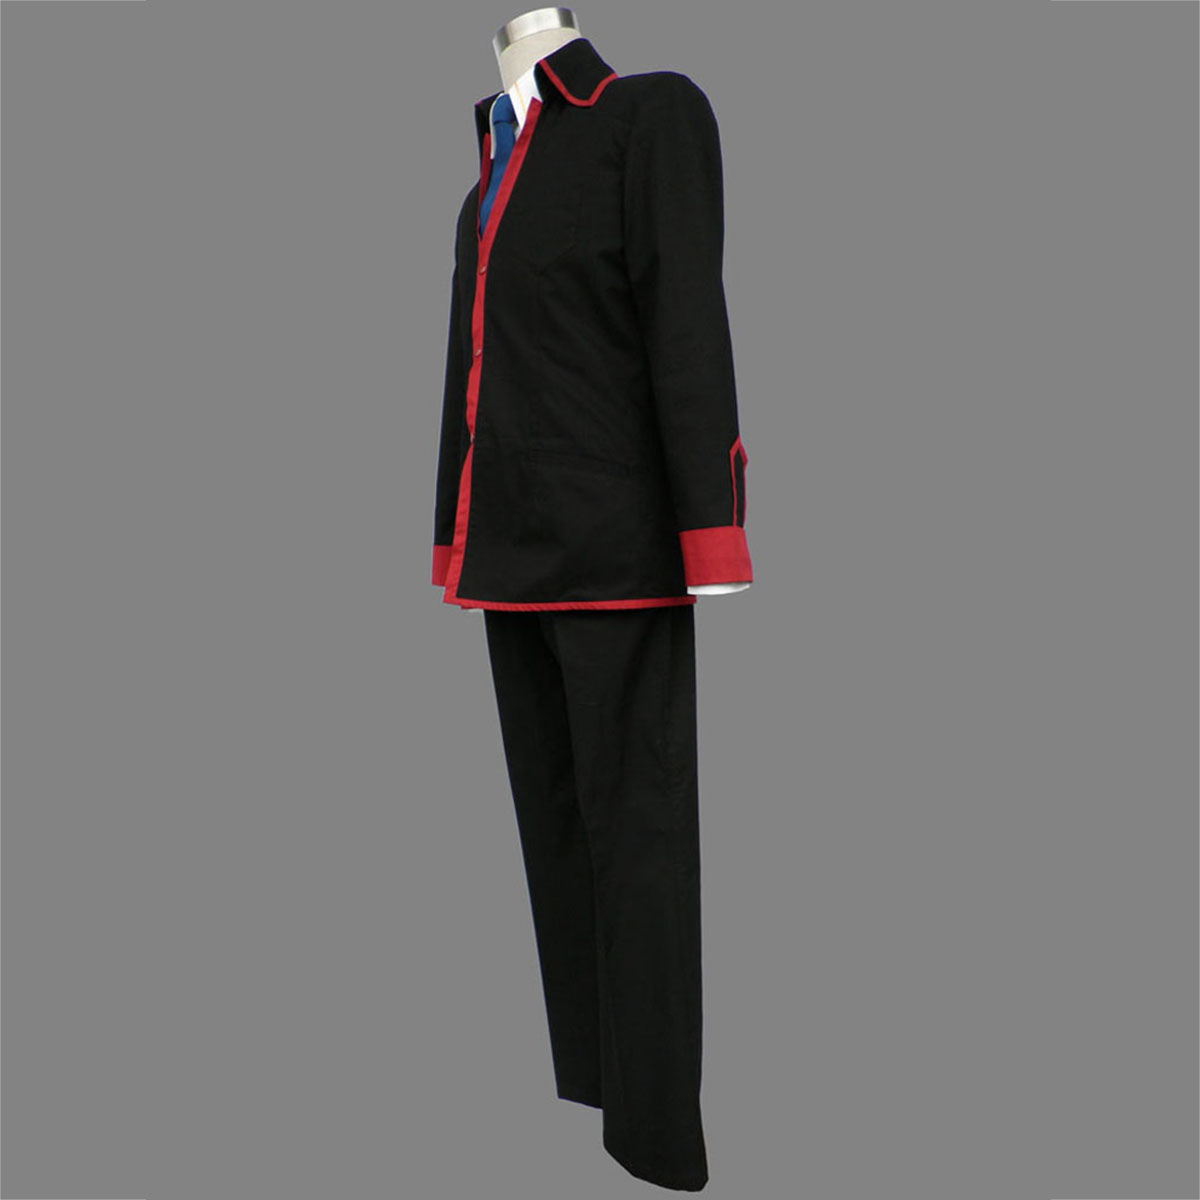 Little Busters Male School Uniform Cosplay Costumes AU